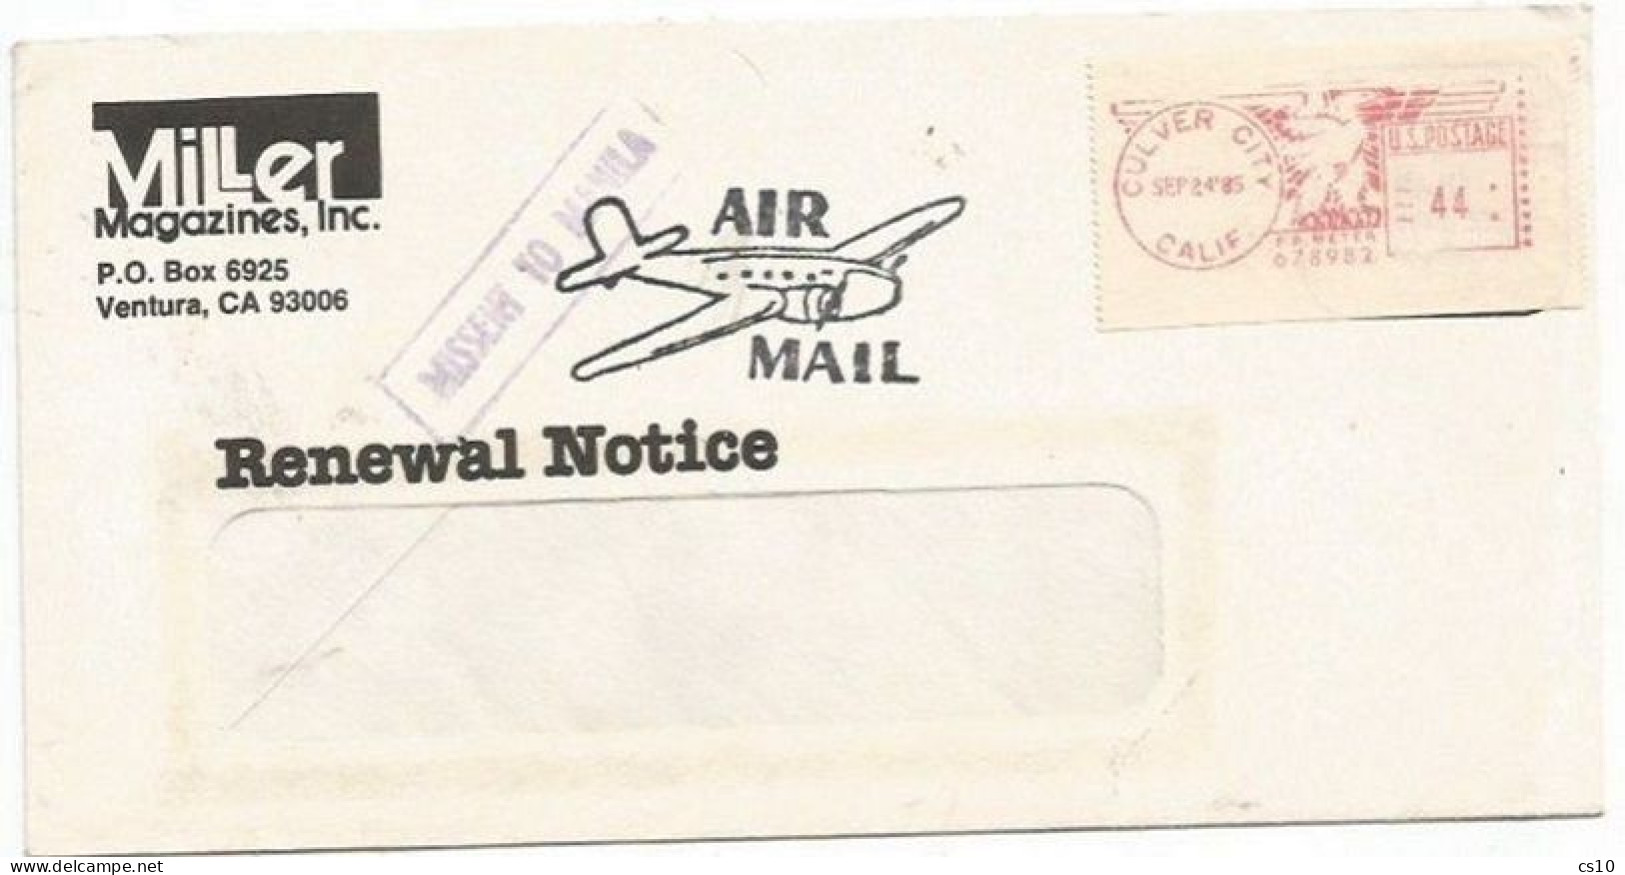 USA 1985 AirmailCV Culver City CA 24sep85 X Italy Milano "MISSENT TO MANILA" Postage Label C.44 - Postal History